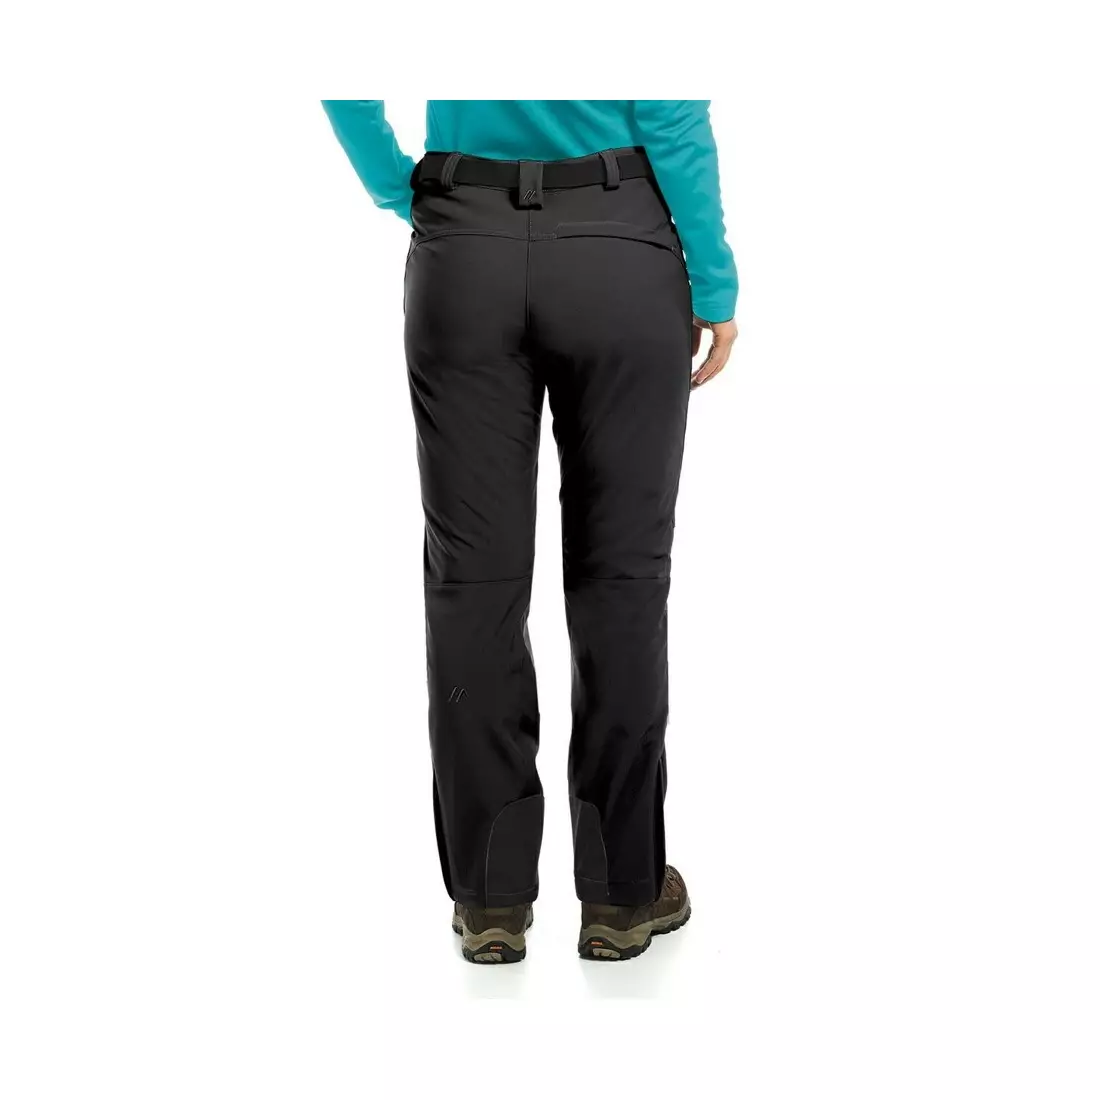 MAIER women's winter hiking pants TECH PANTS black 236008/900.38